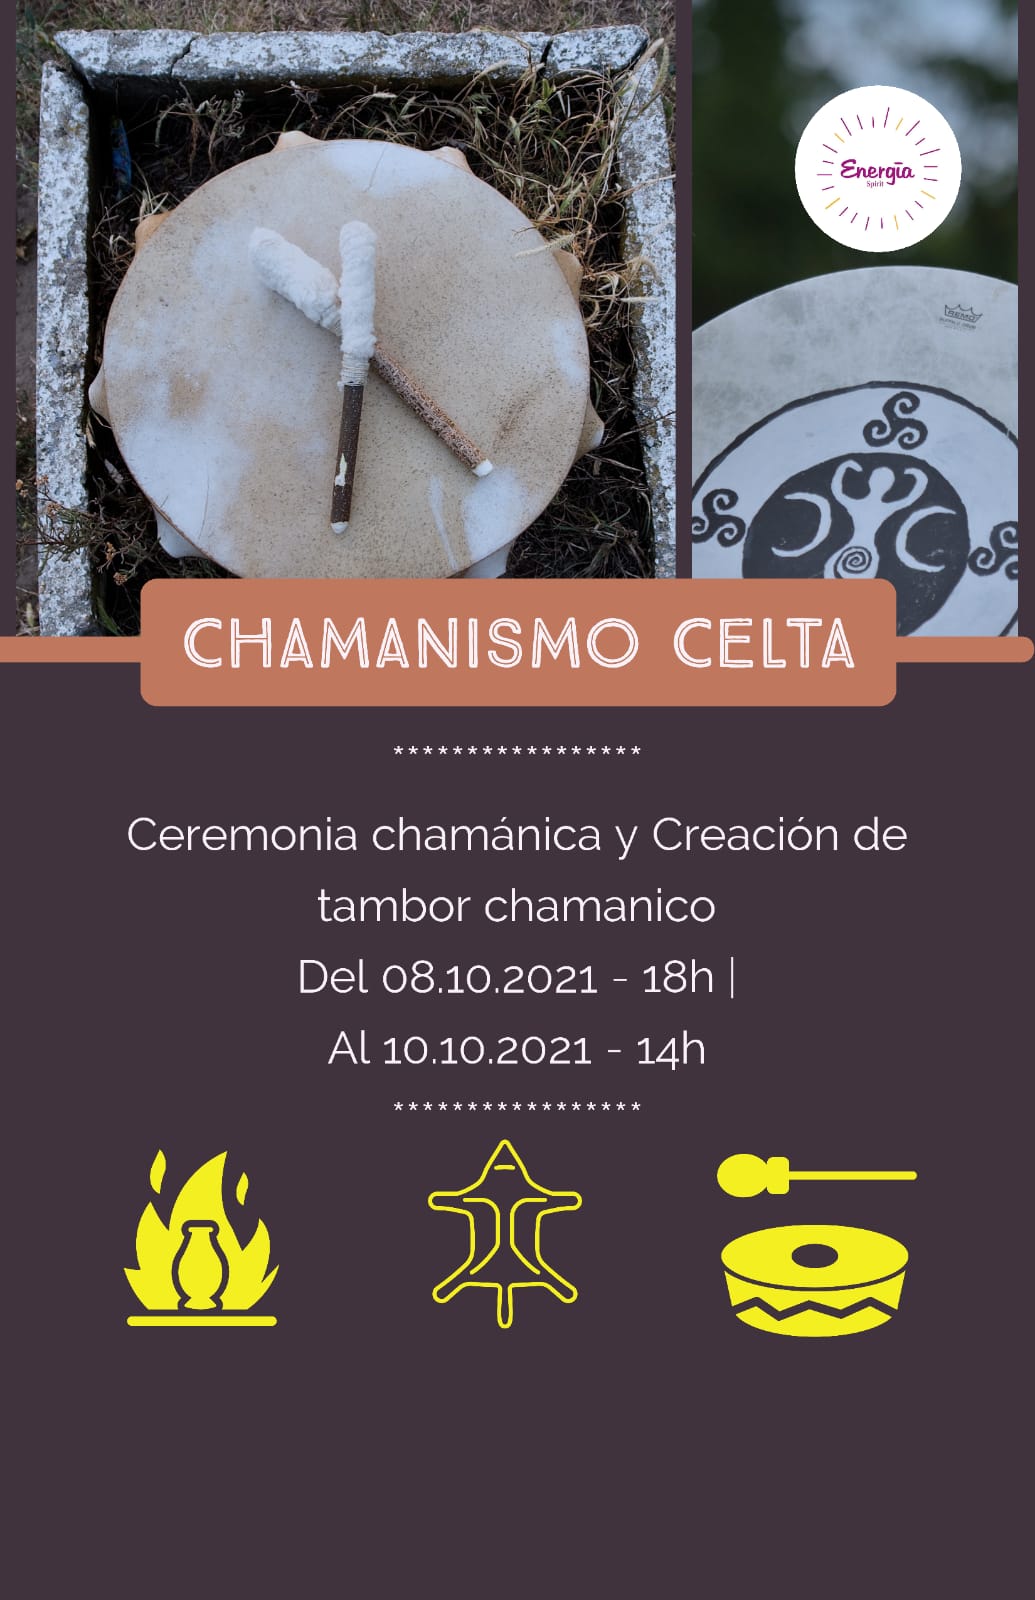 Chamanismo celta. ceremonia chamanica y creacion de tambor chamanico